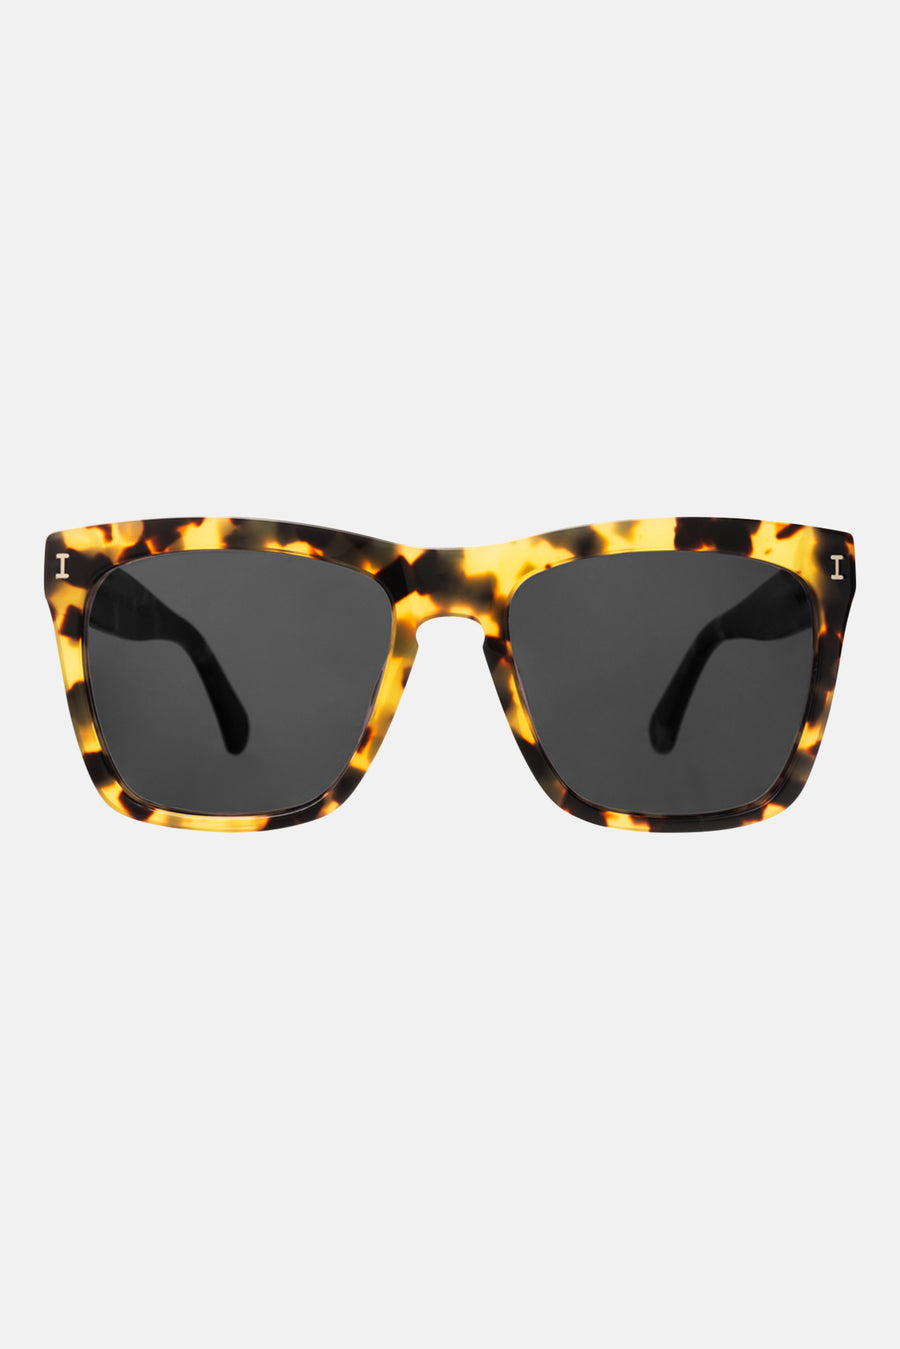 Los Feliz Sunglasses Tortoise/Grey - blueandcream